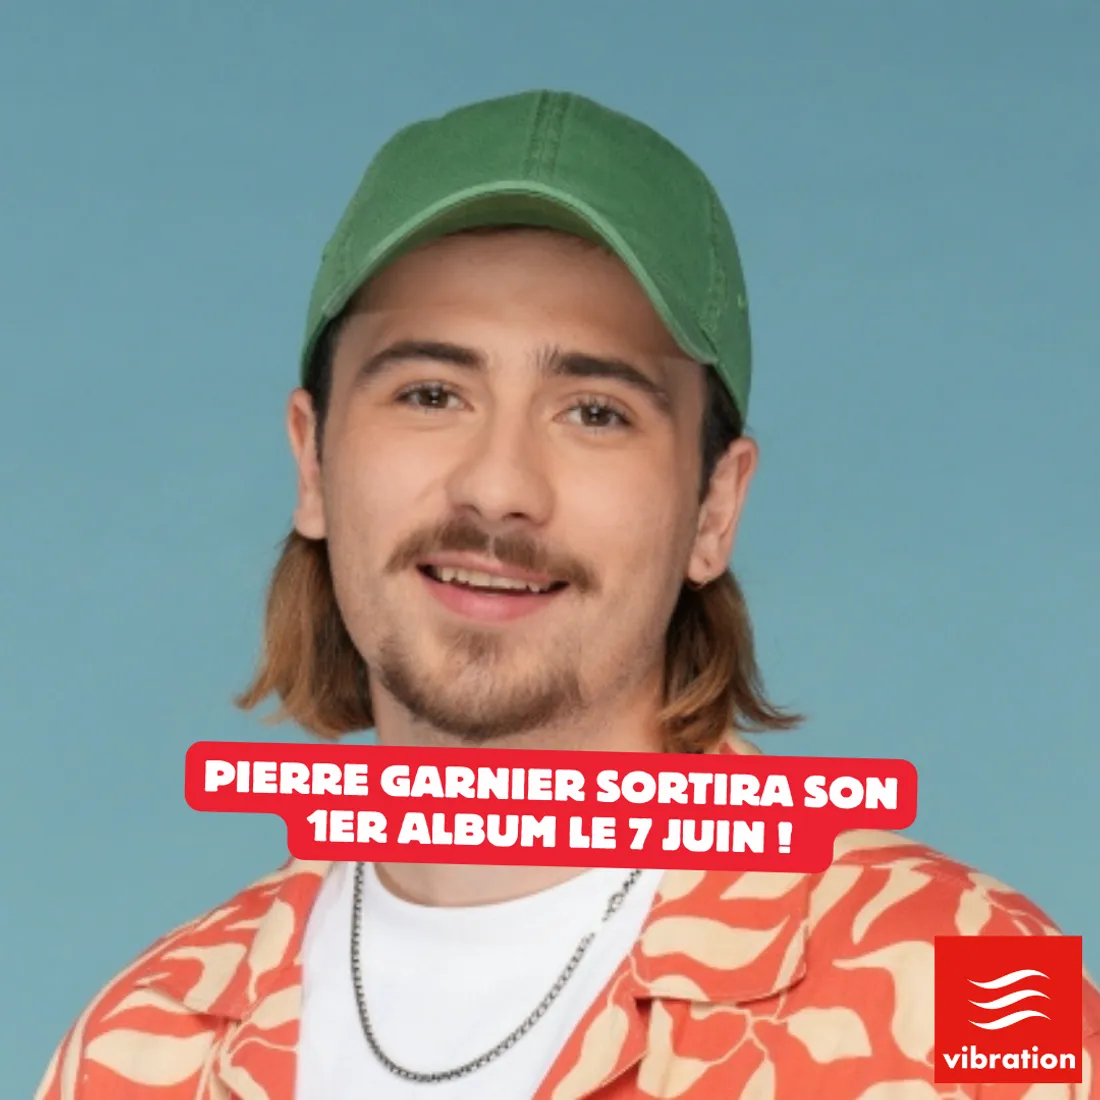 Pierre Garnier sortira son premier album le 7 juin ! 